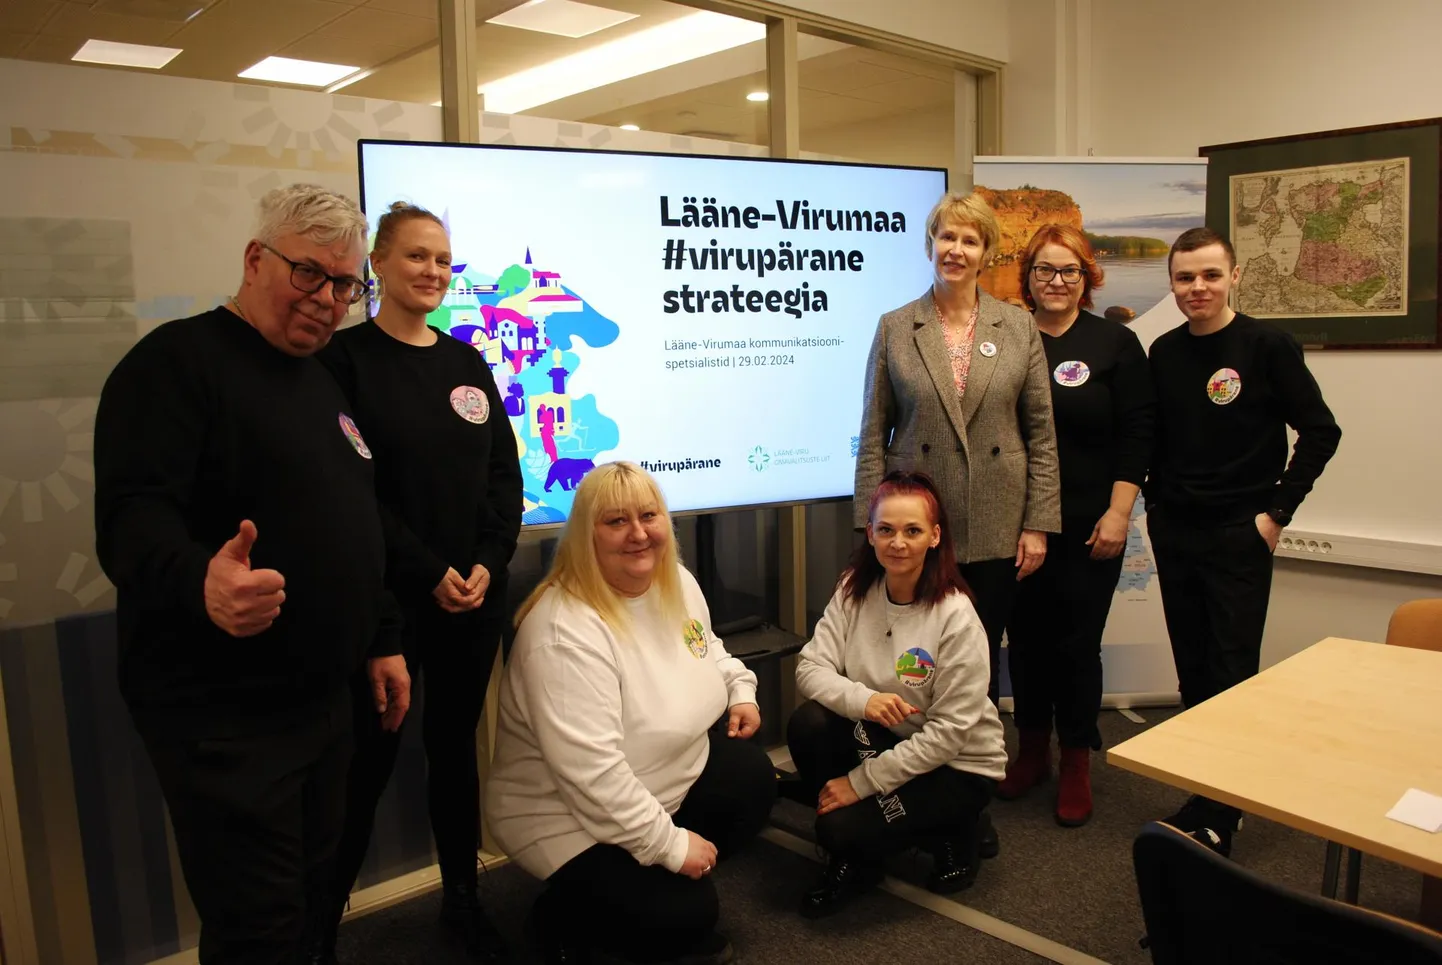 Lääne-Virumaa kommunikatsioonispetsialistid tutvustasid Tallinnas maakonna uut brändi.